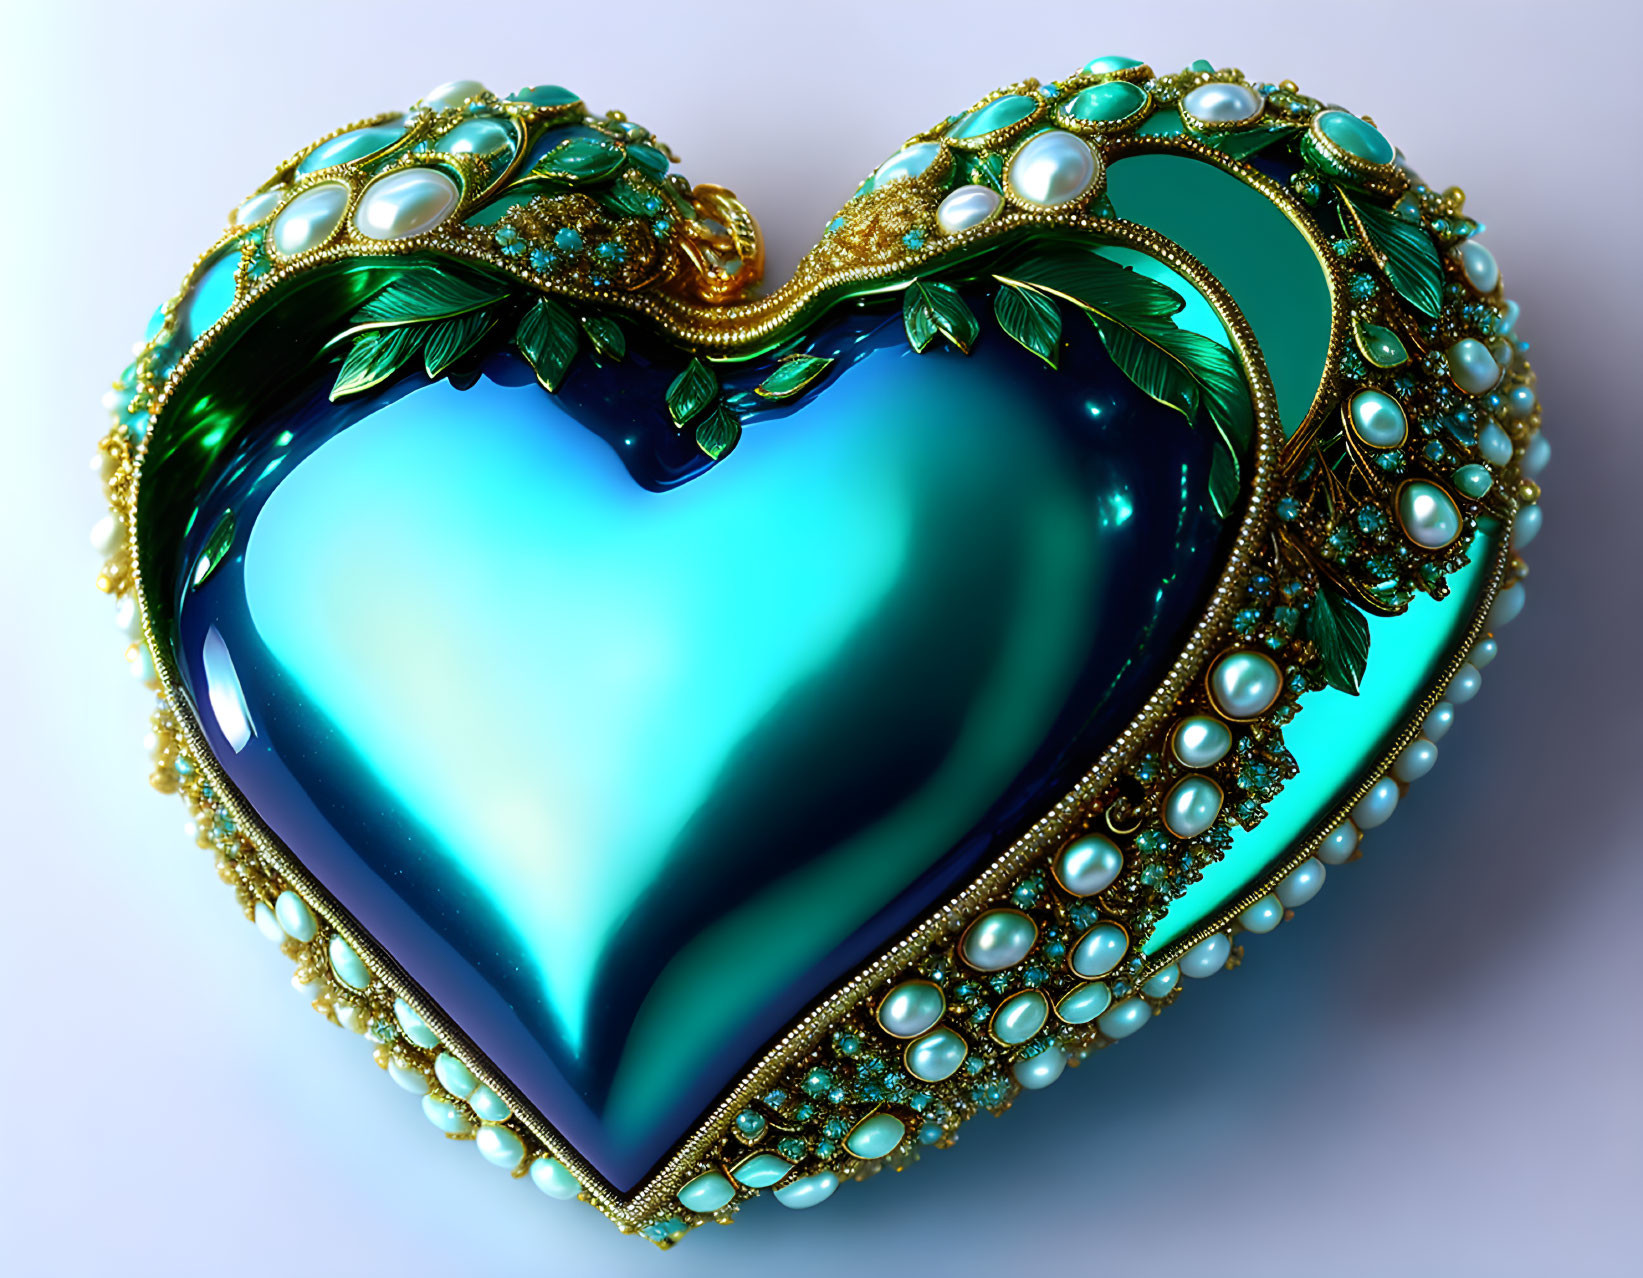  A Soft Blue-Green Massive Heart 